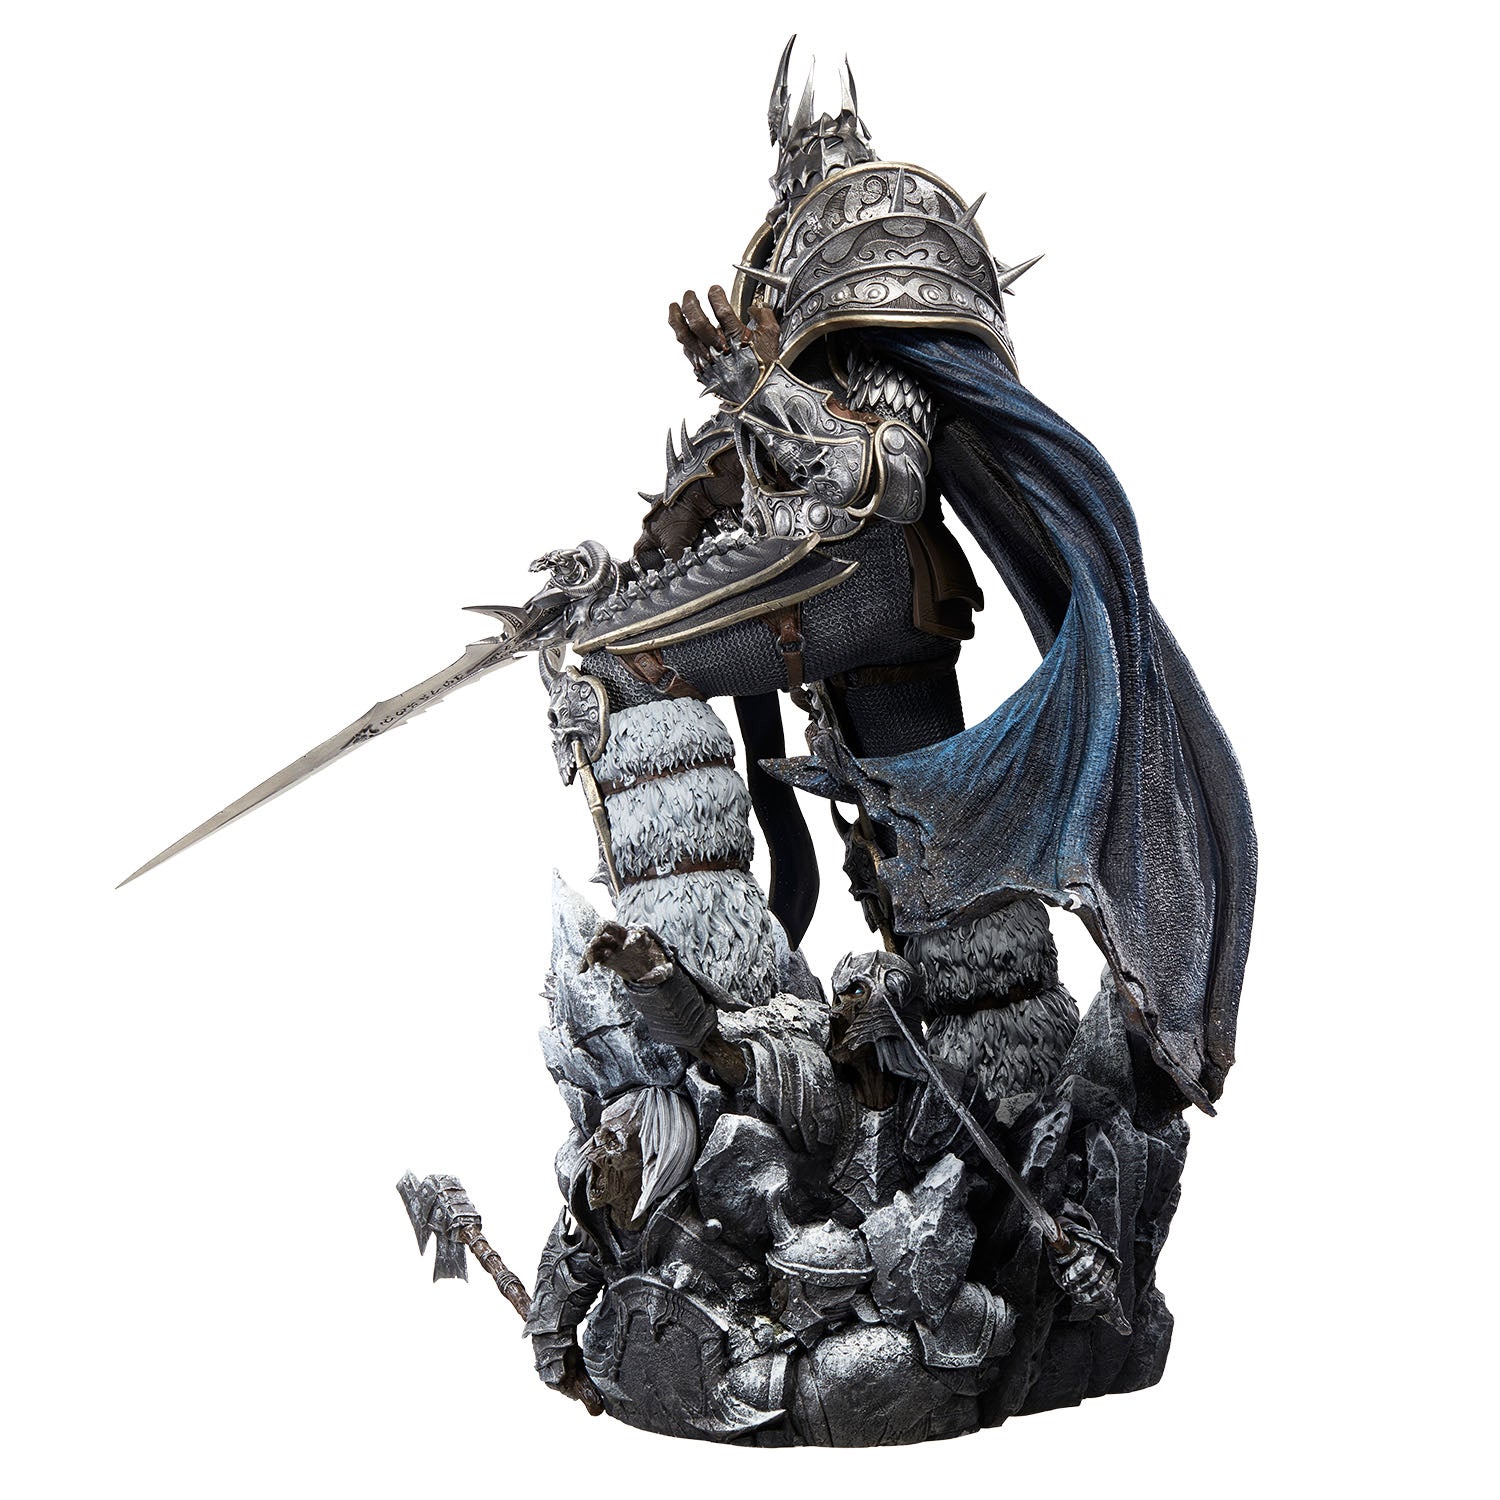 World of Warcraft Lich King Arthas Menethil 66cm Premium Statue - Back Left View